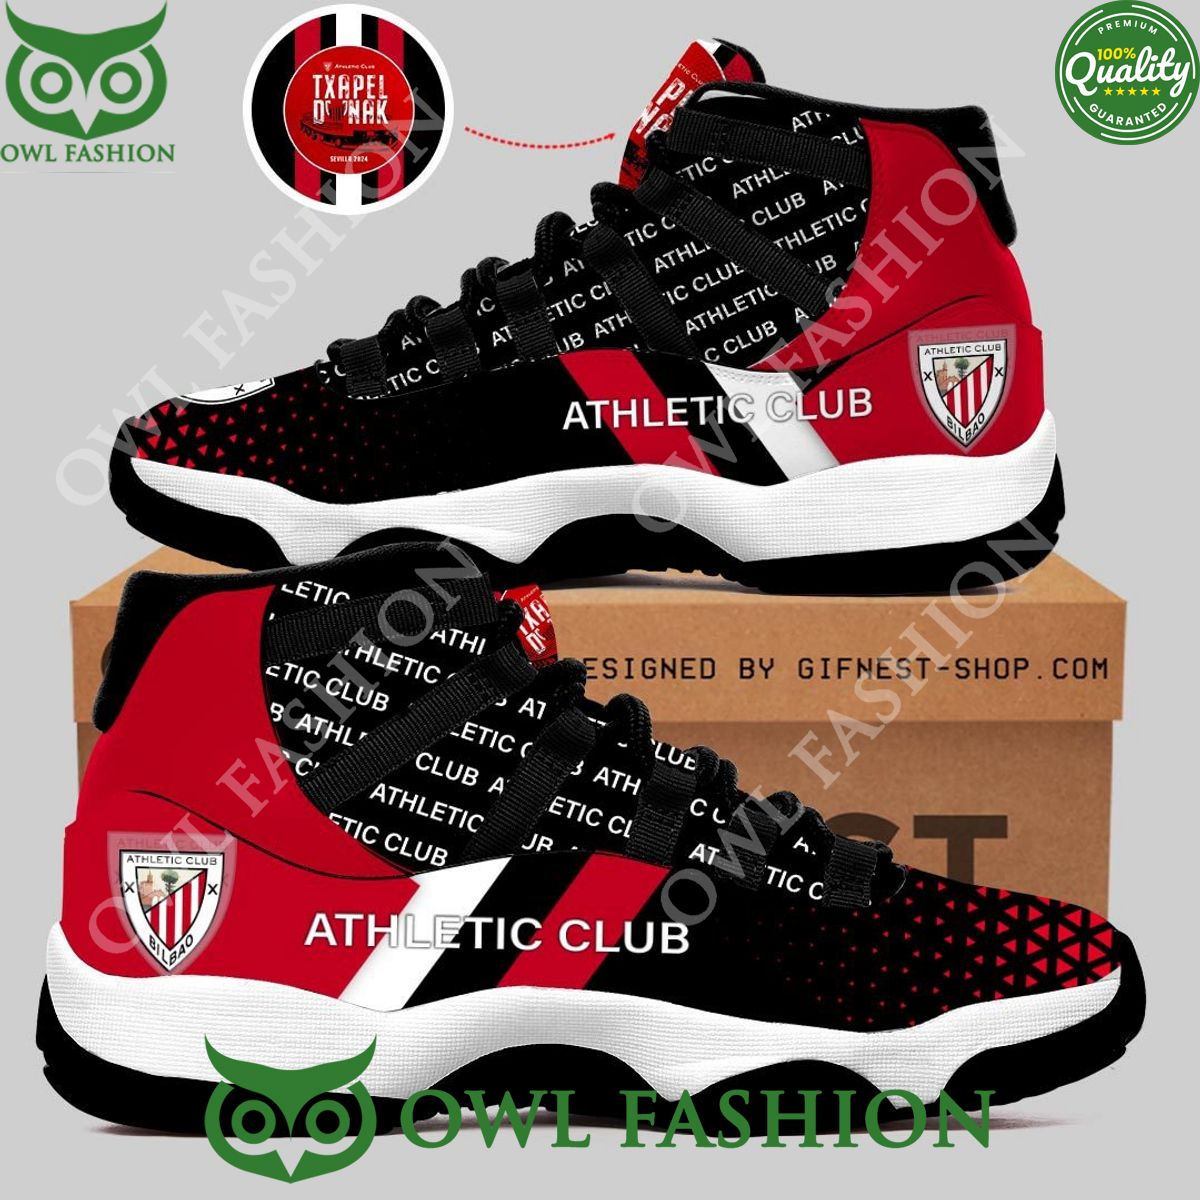 Laliga Athletic Club Txapel Dunak Air Jordan 11 Shoes